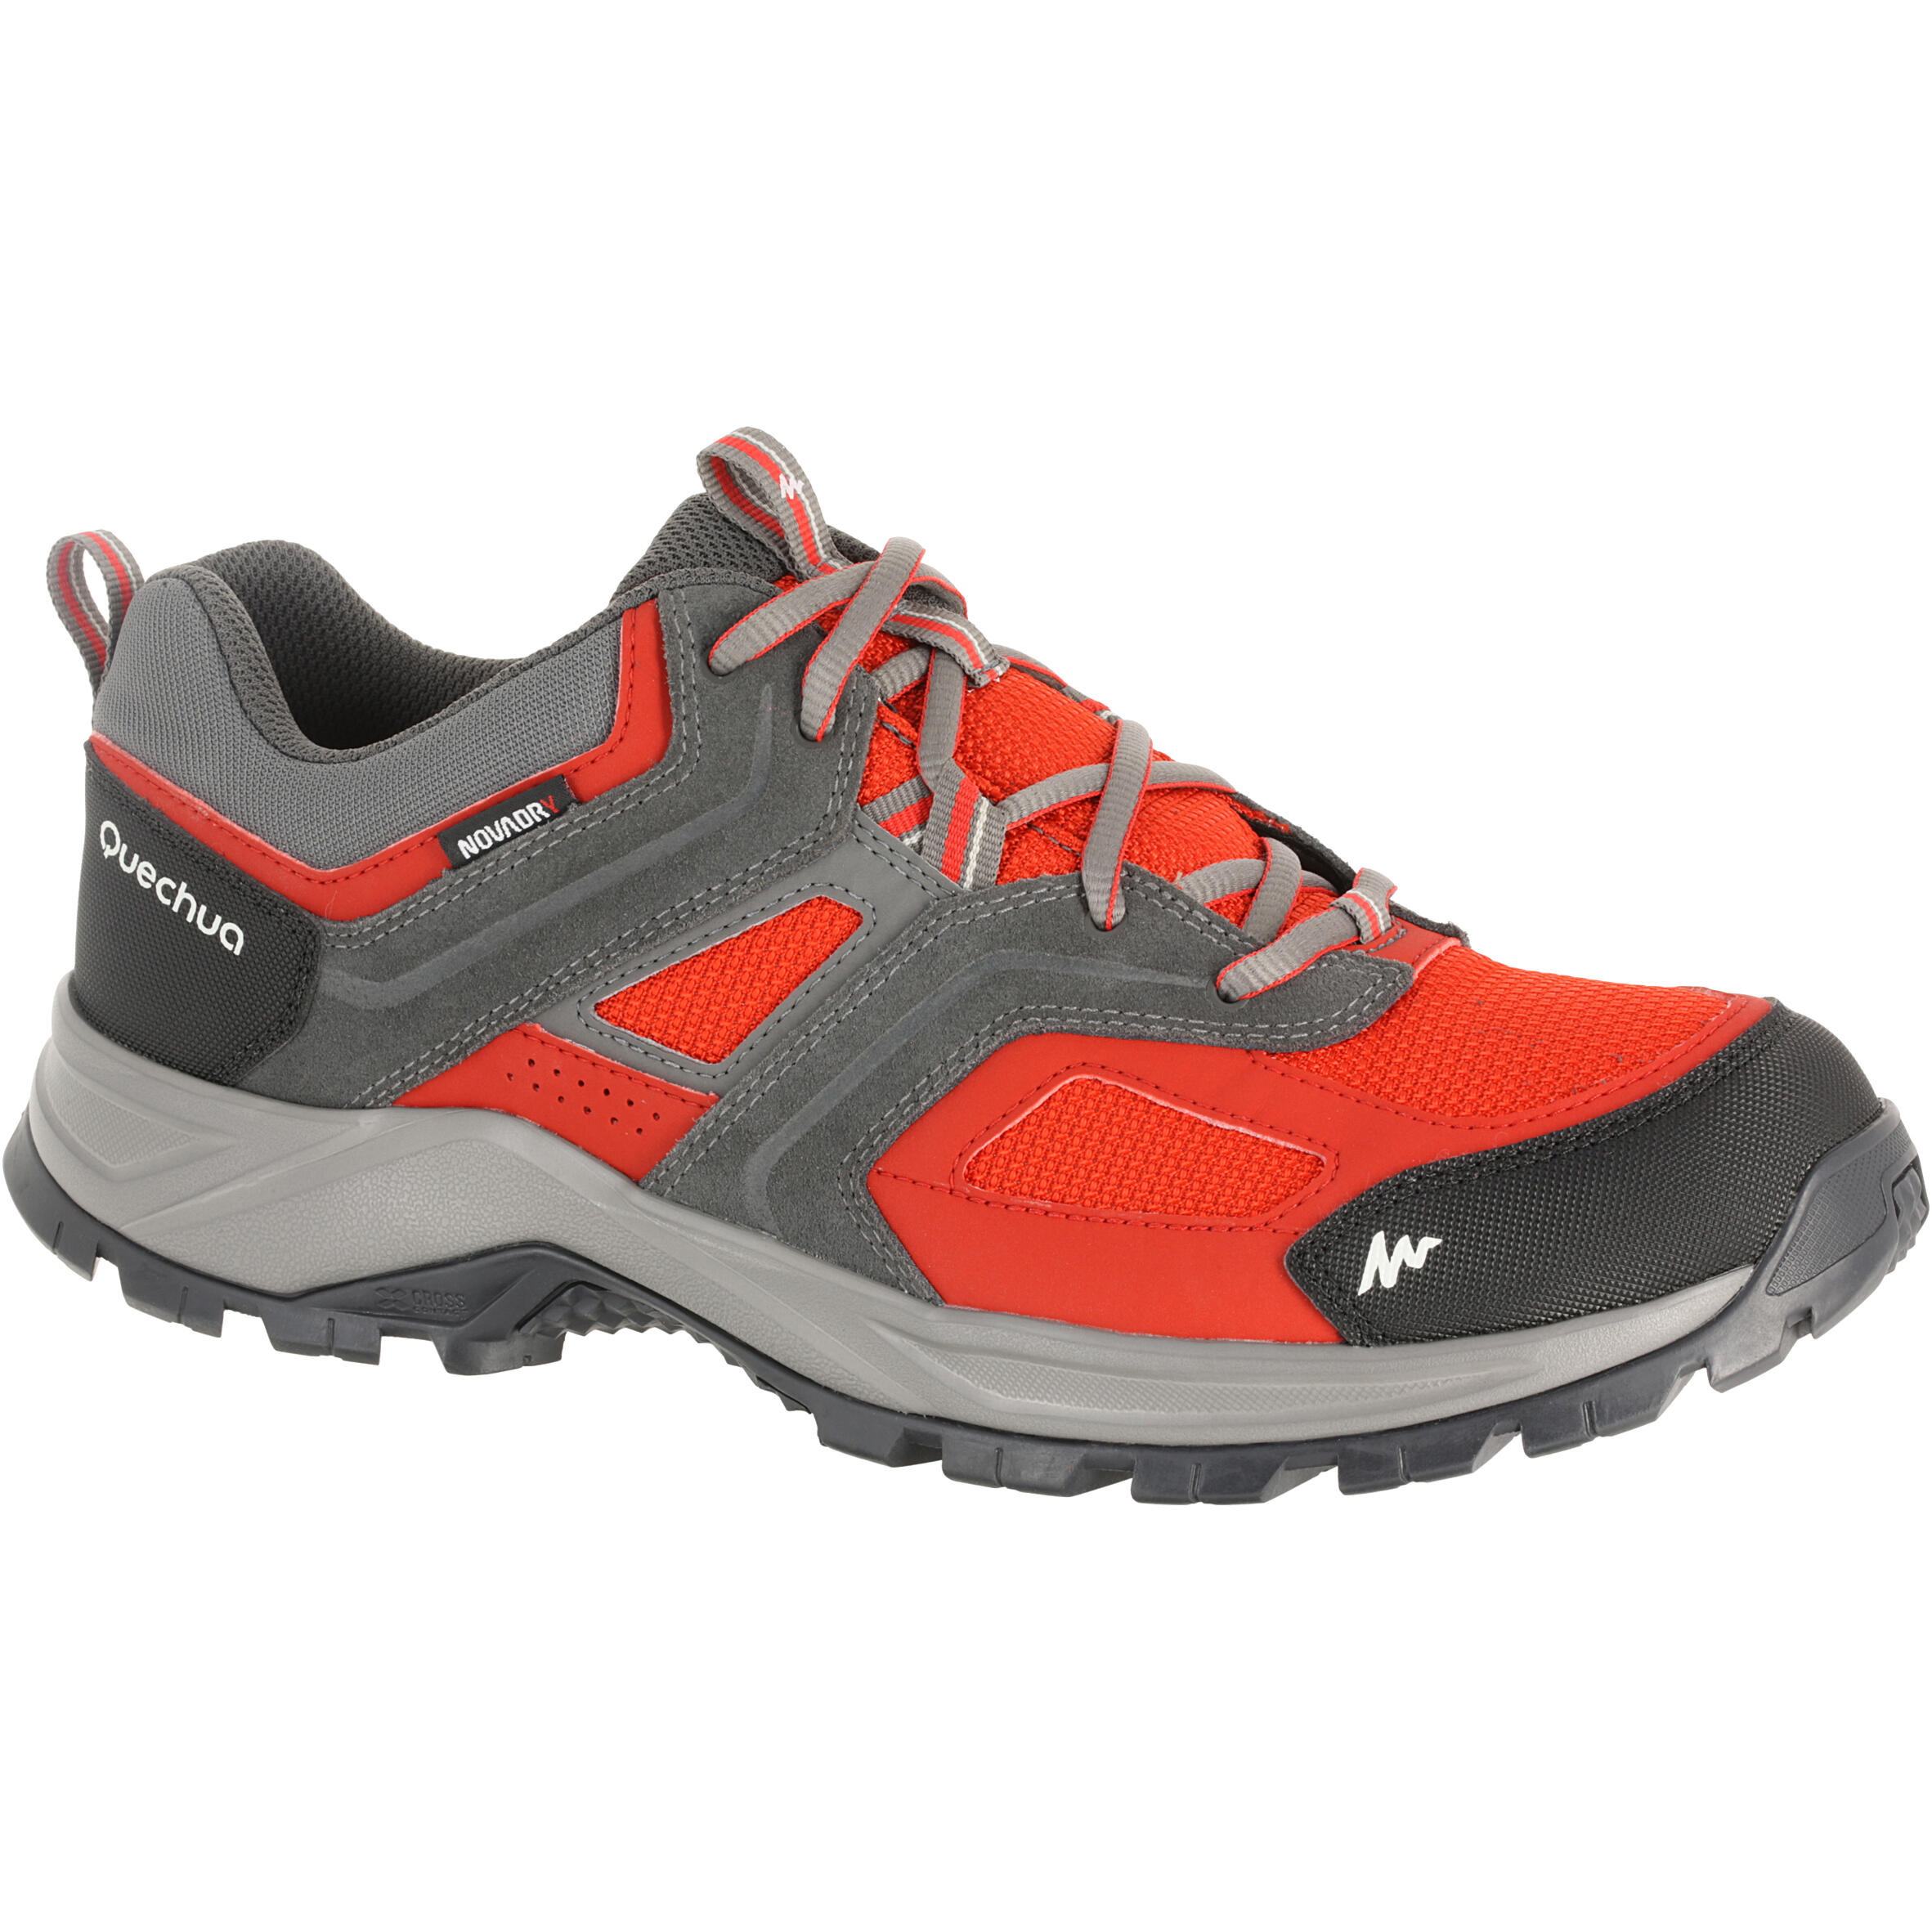 QUECHUA Arpenaz 100 Men's Hiking Waterproof Shoes red